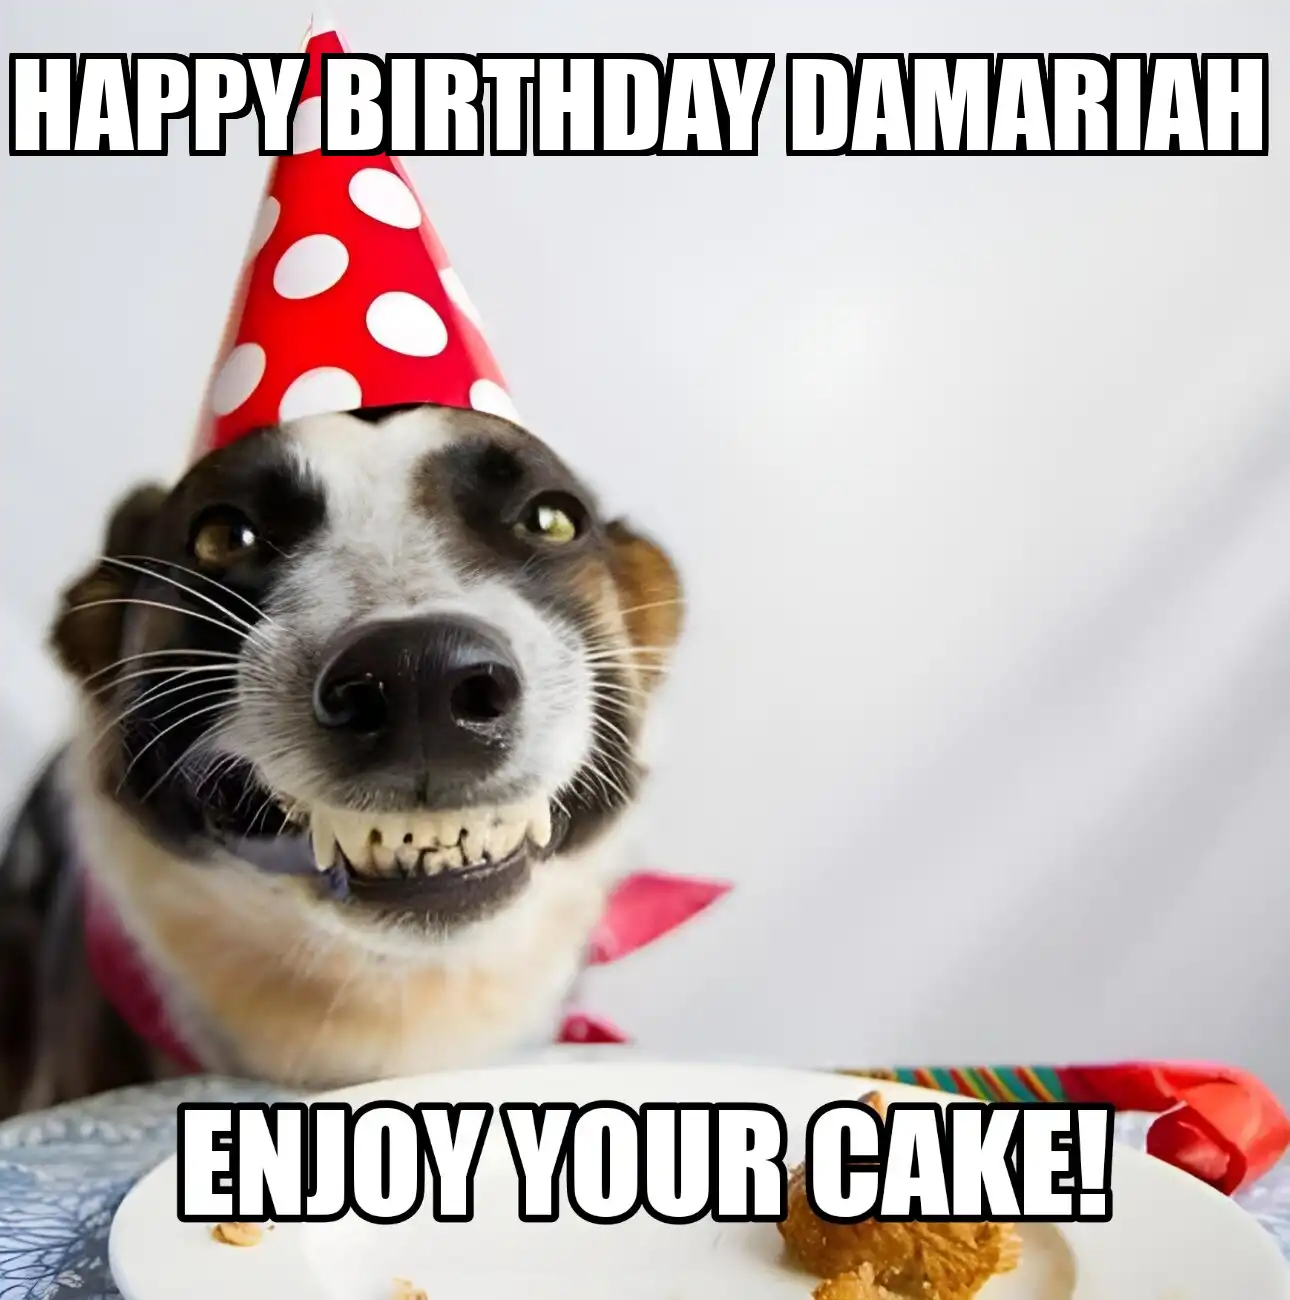 Happy Birthday Damariah Enjoy Your Cake Dog Meme